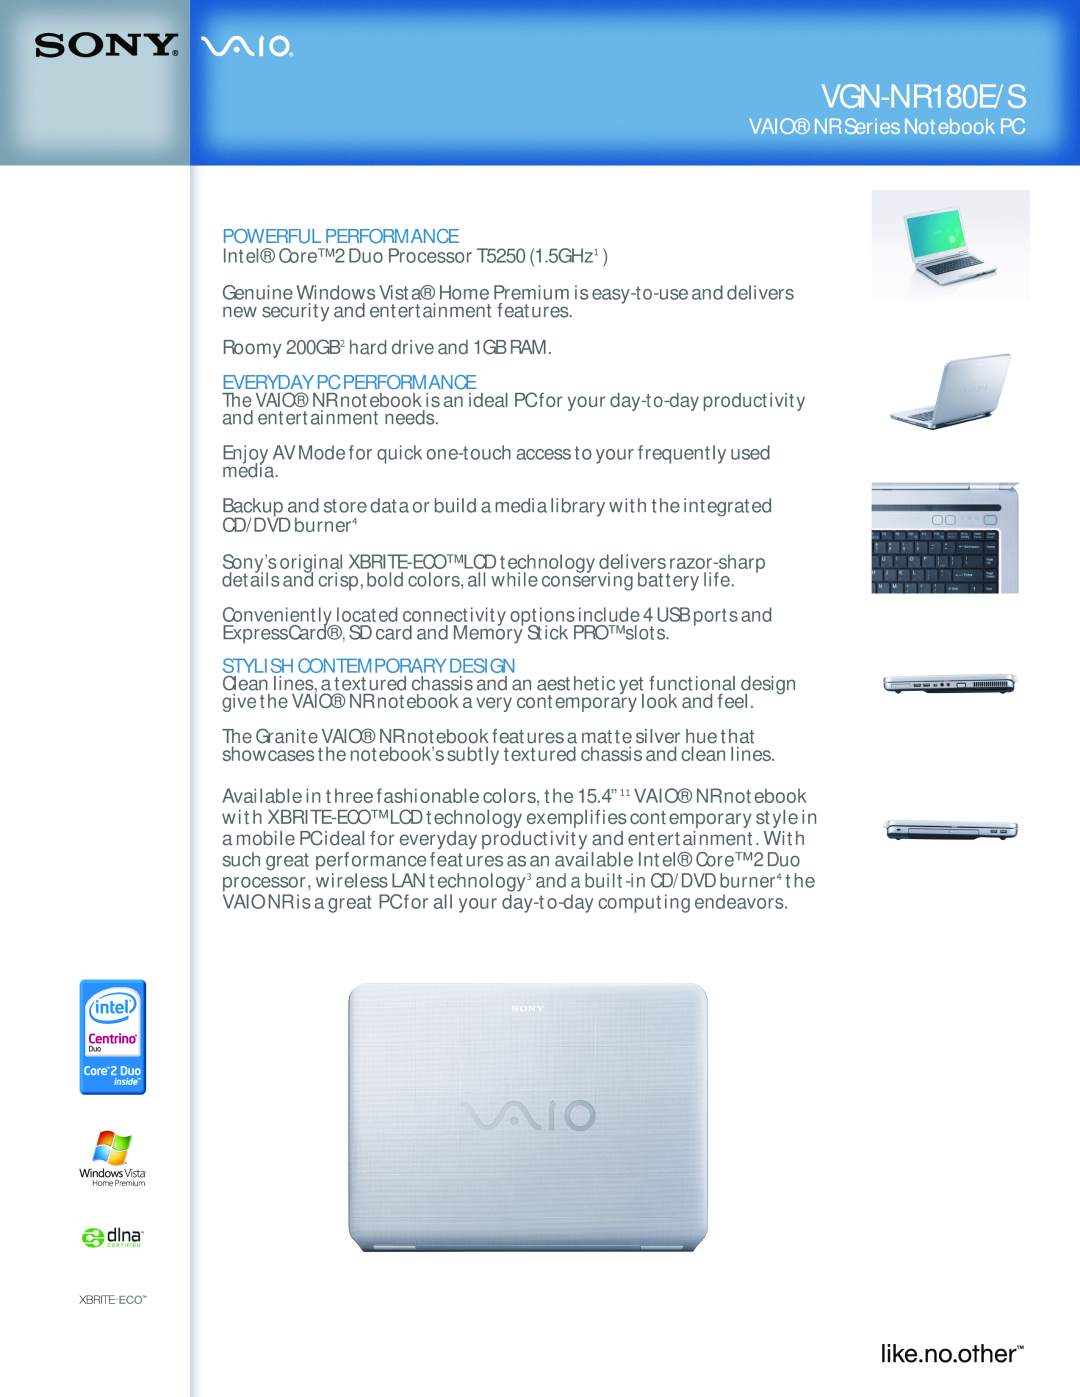 Sony VGNNR180E/S manual VGN-NR180E/S, VAIONR Series Notebook PC, Powerful Performance, Everyday Pc Performance 